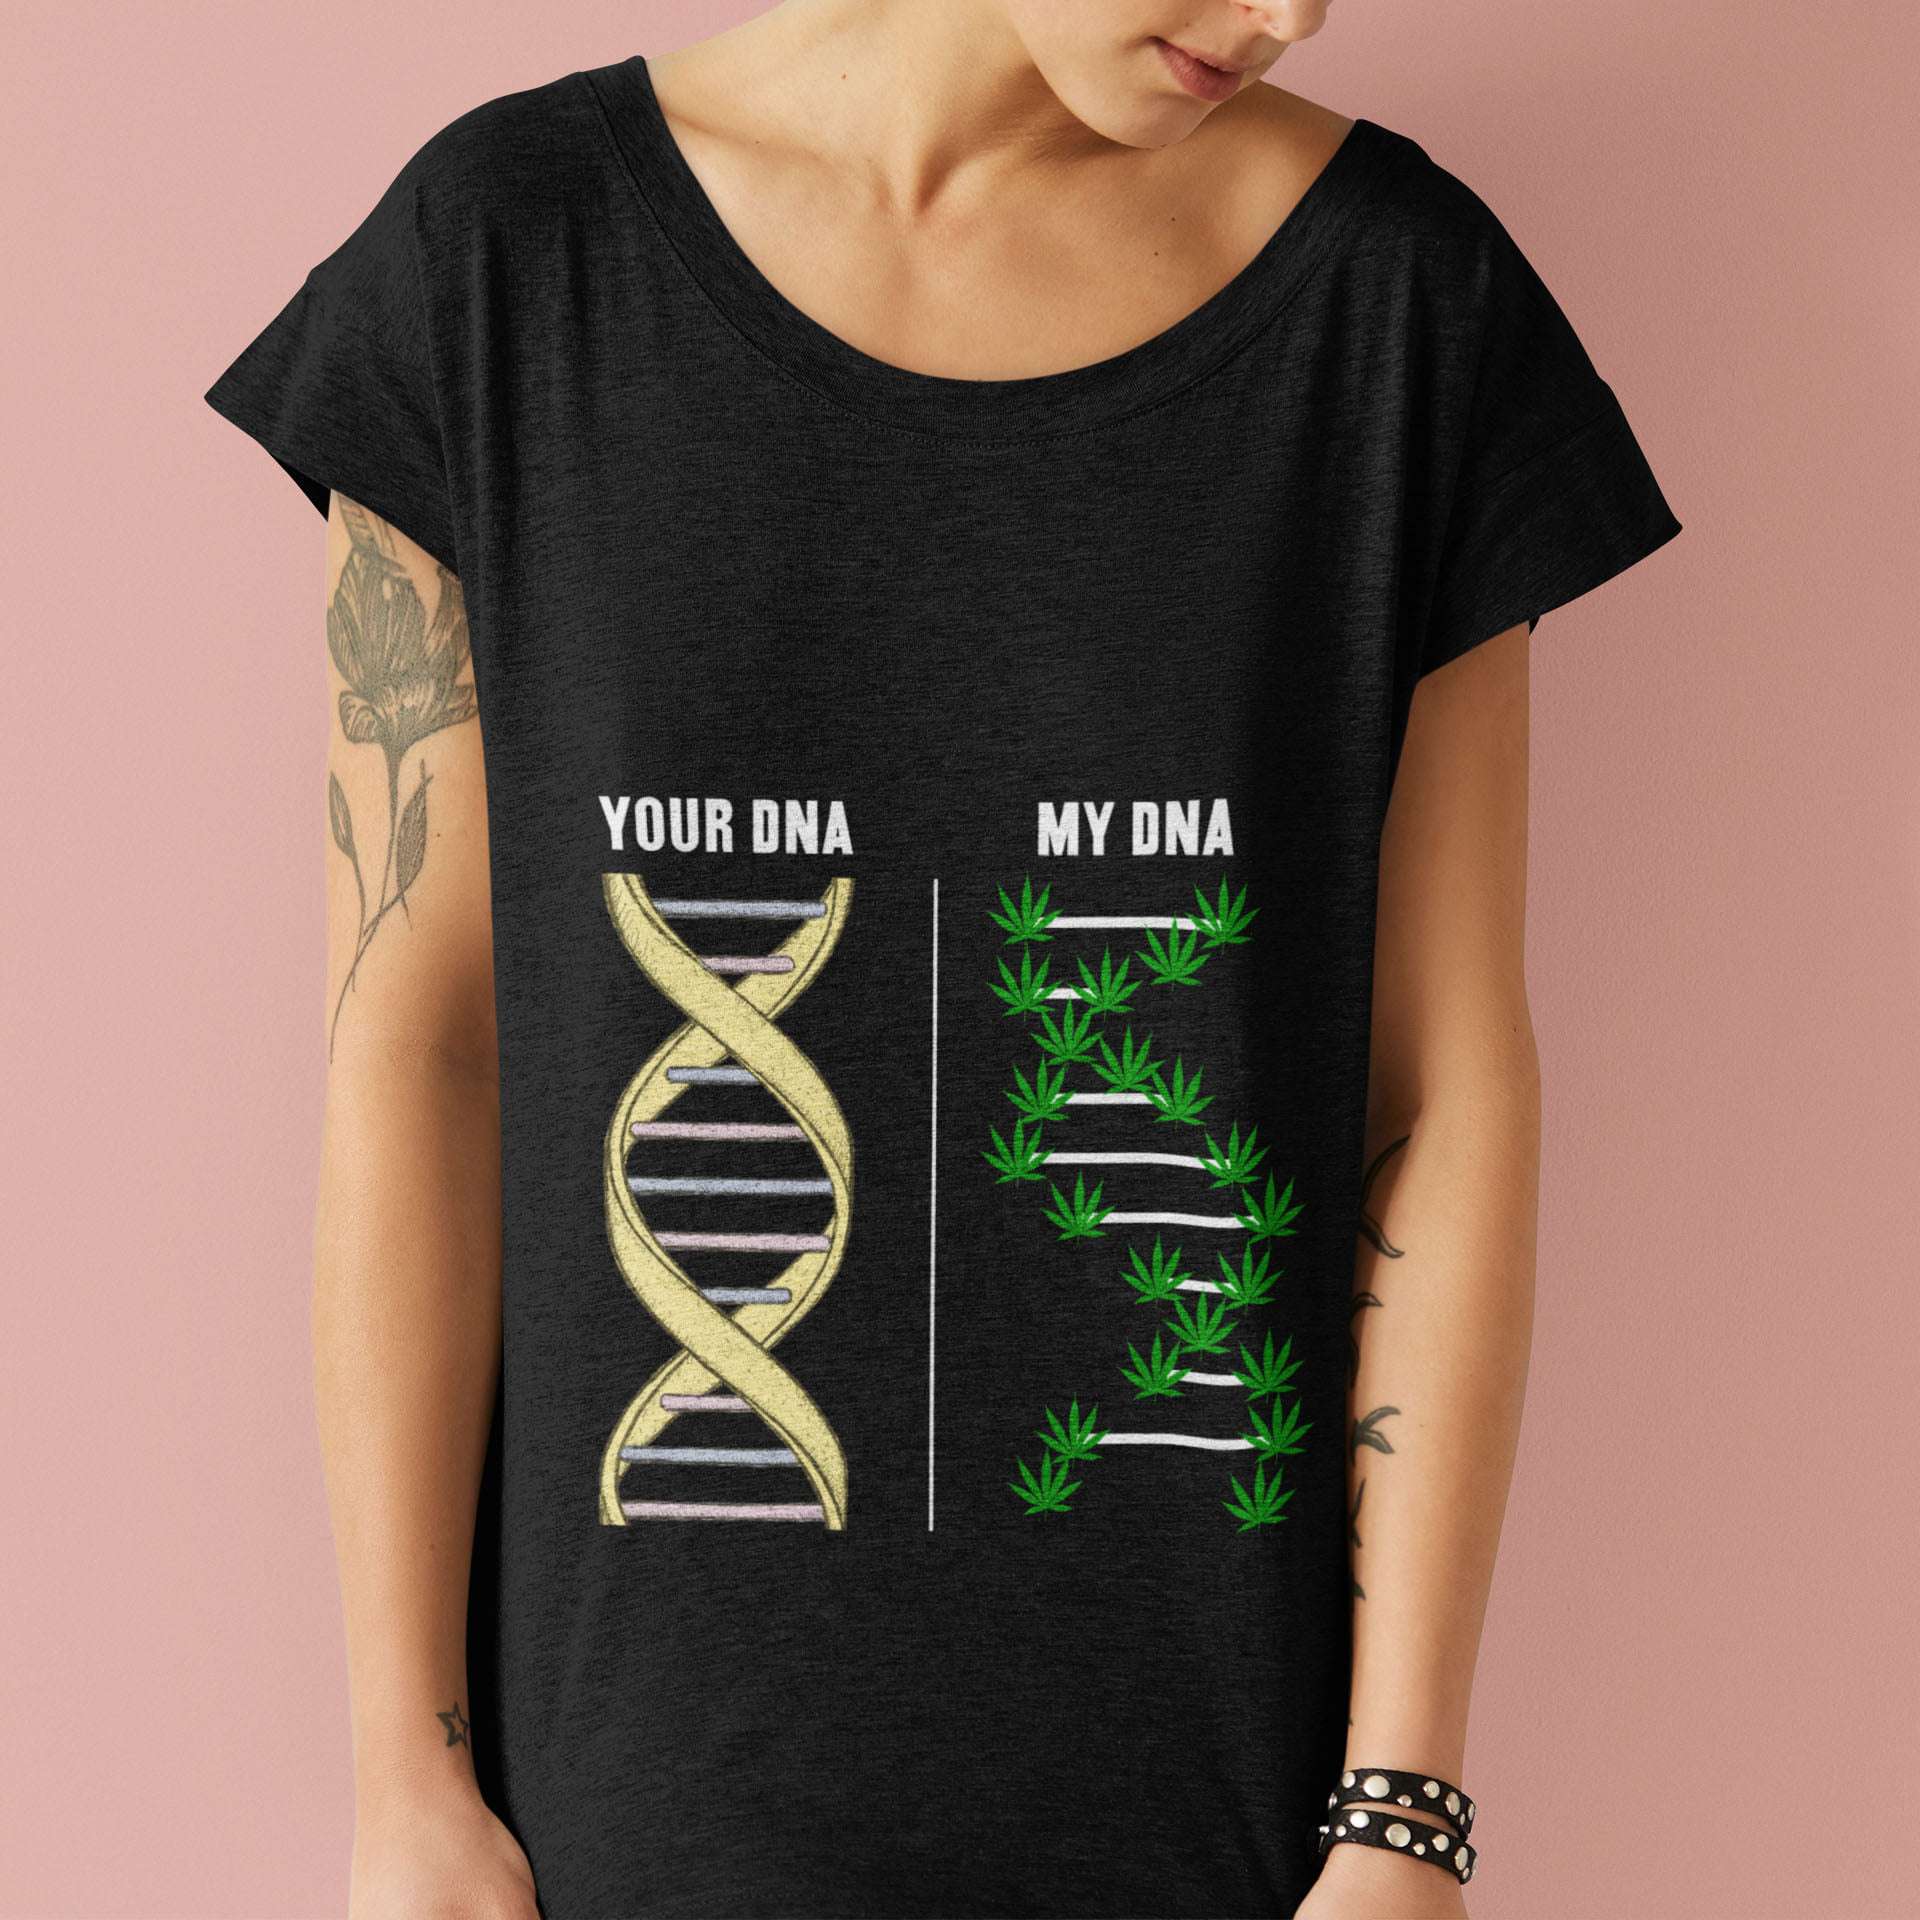 Your DNA versus My DNA - Plant DNA, plant lover